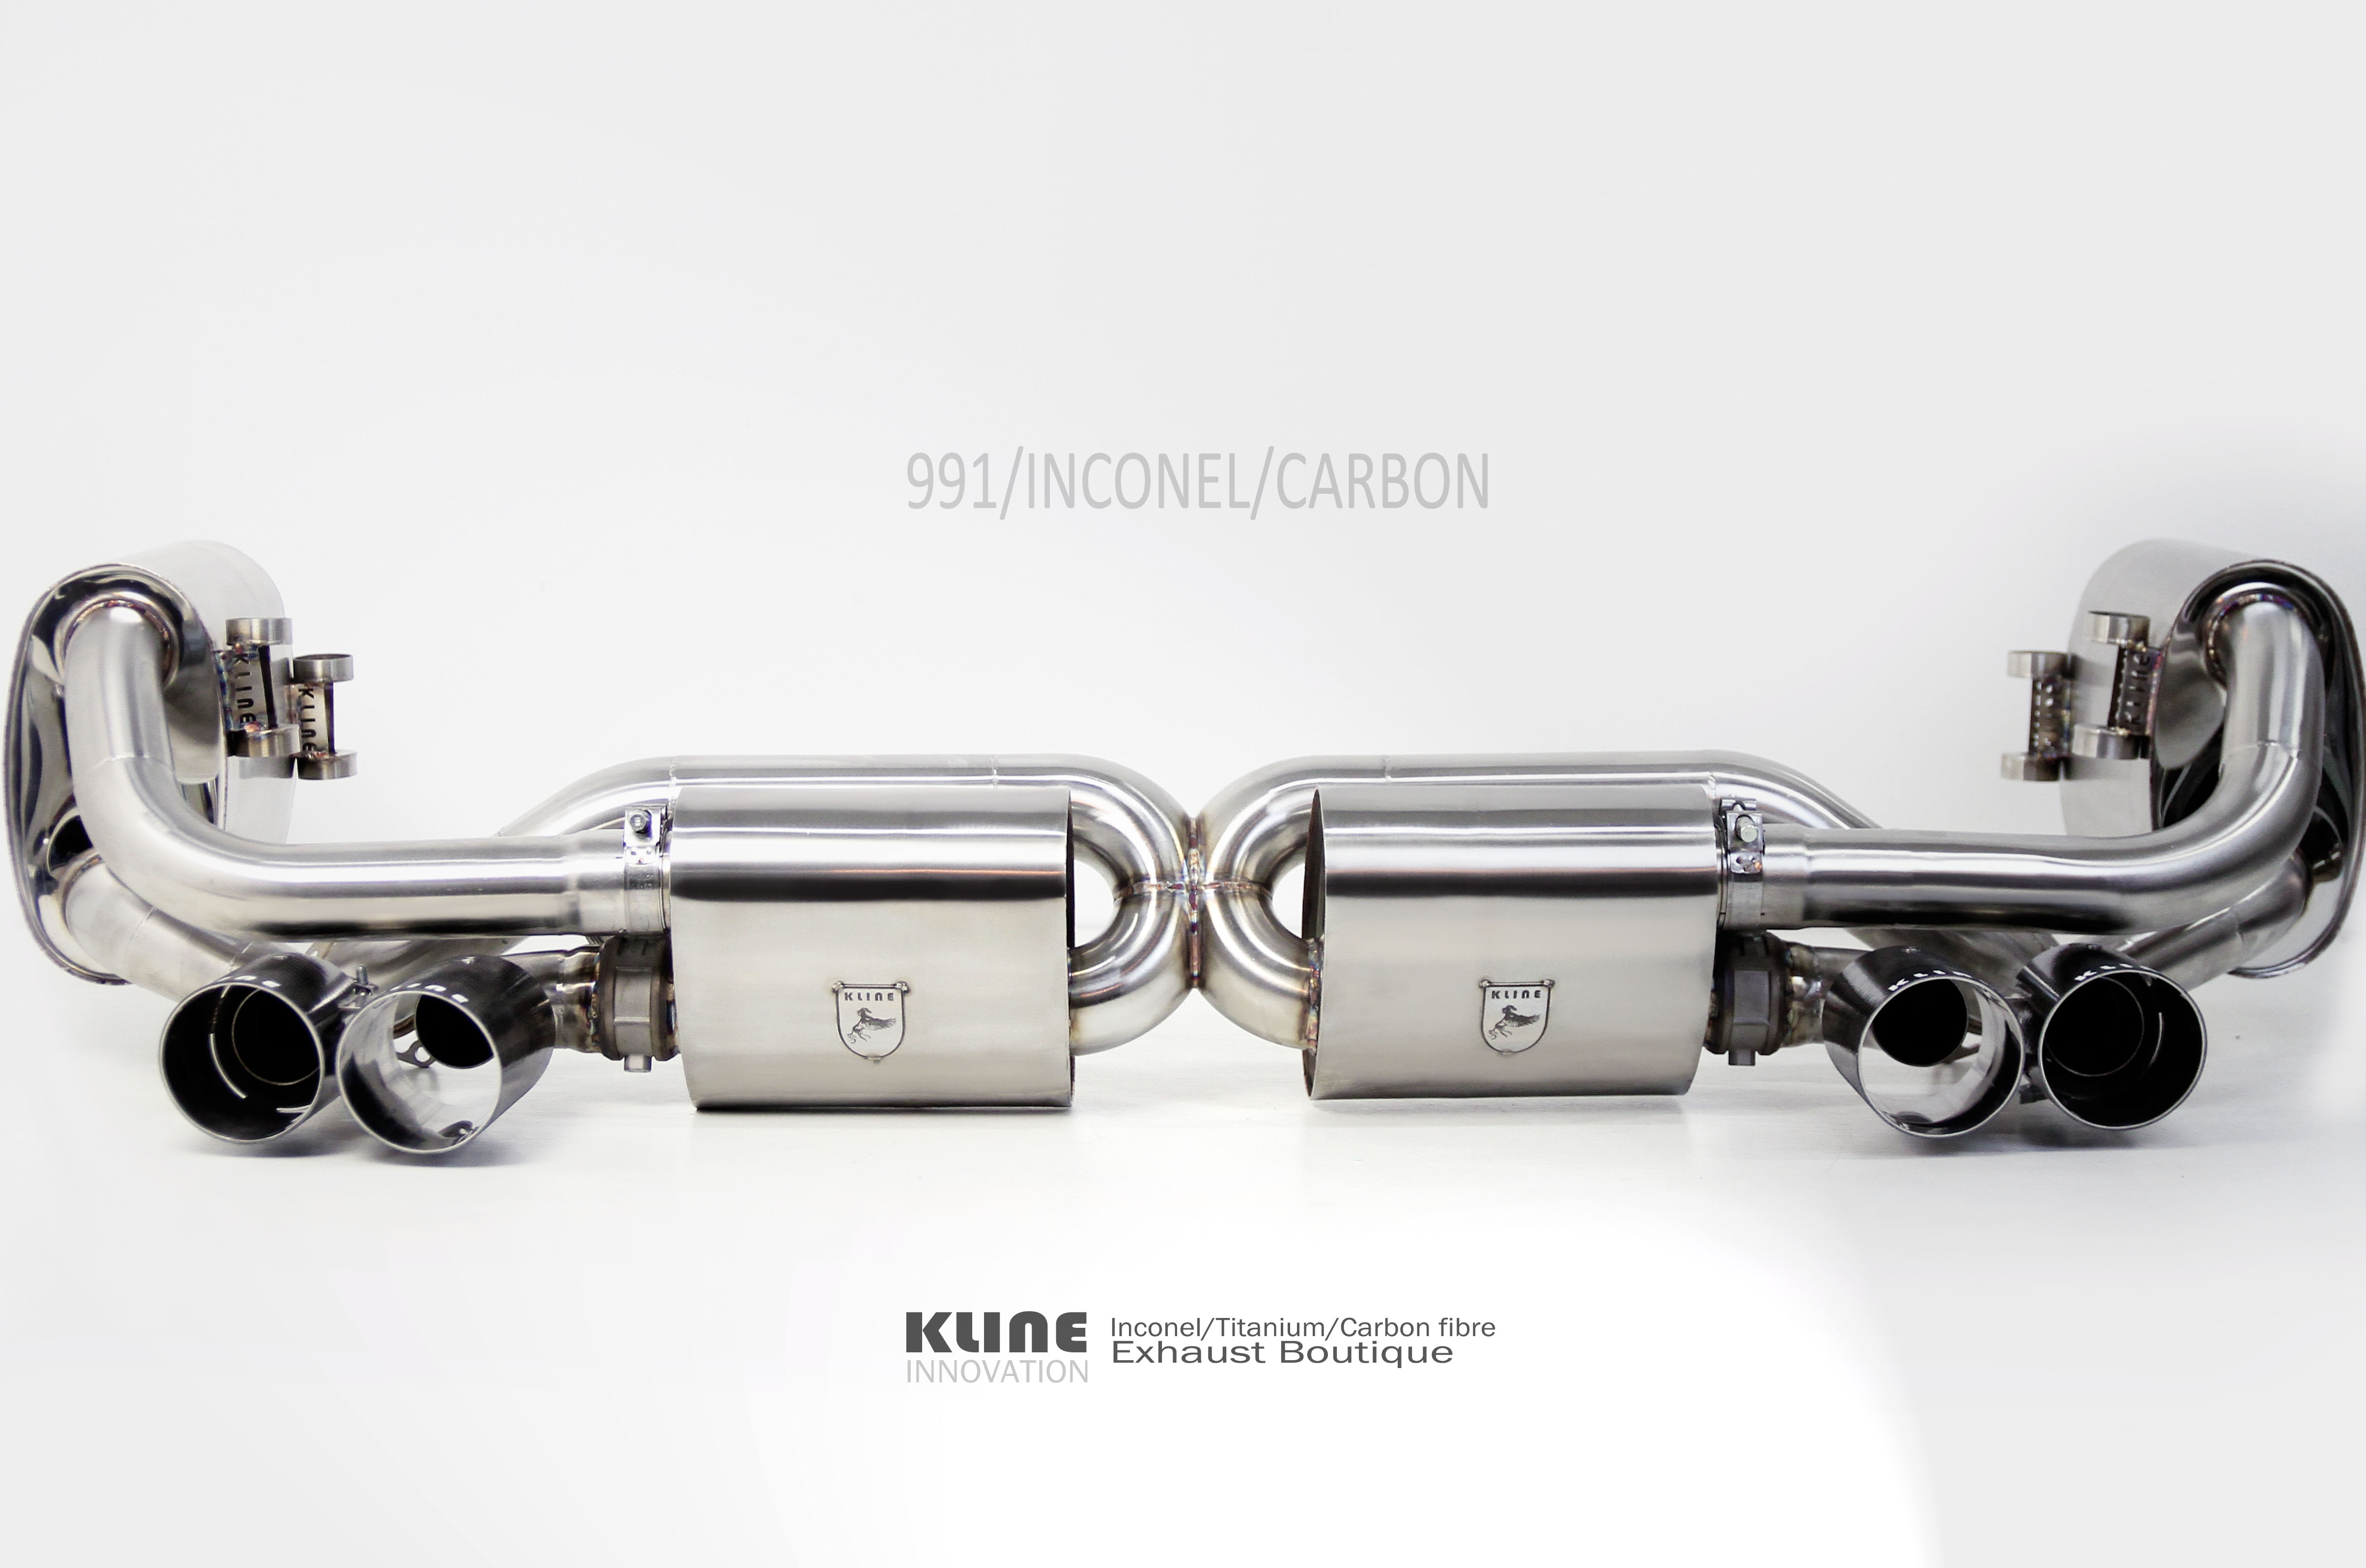 Valvetronic Inconel Exhaust for Porsche 911 (991) from Kline Innovation